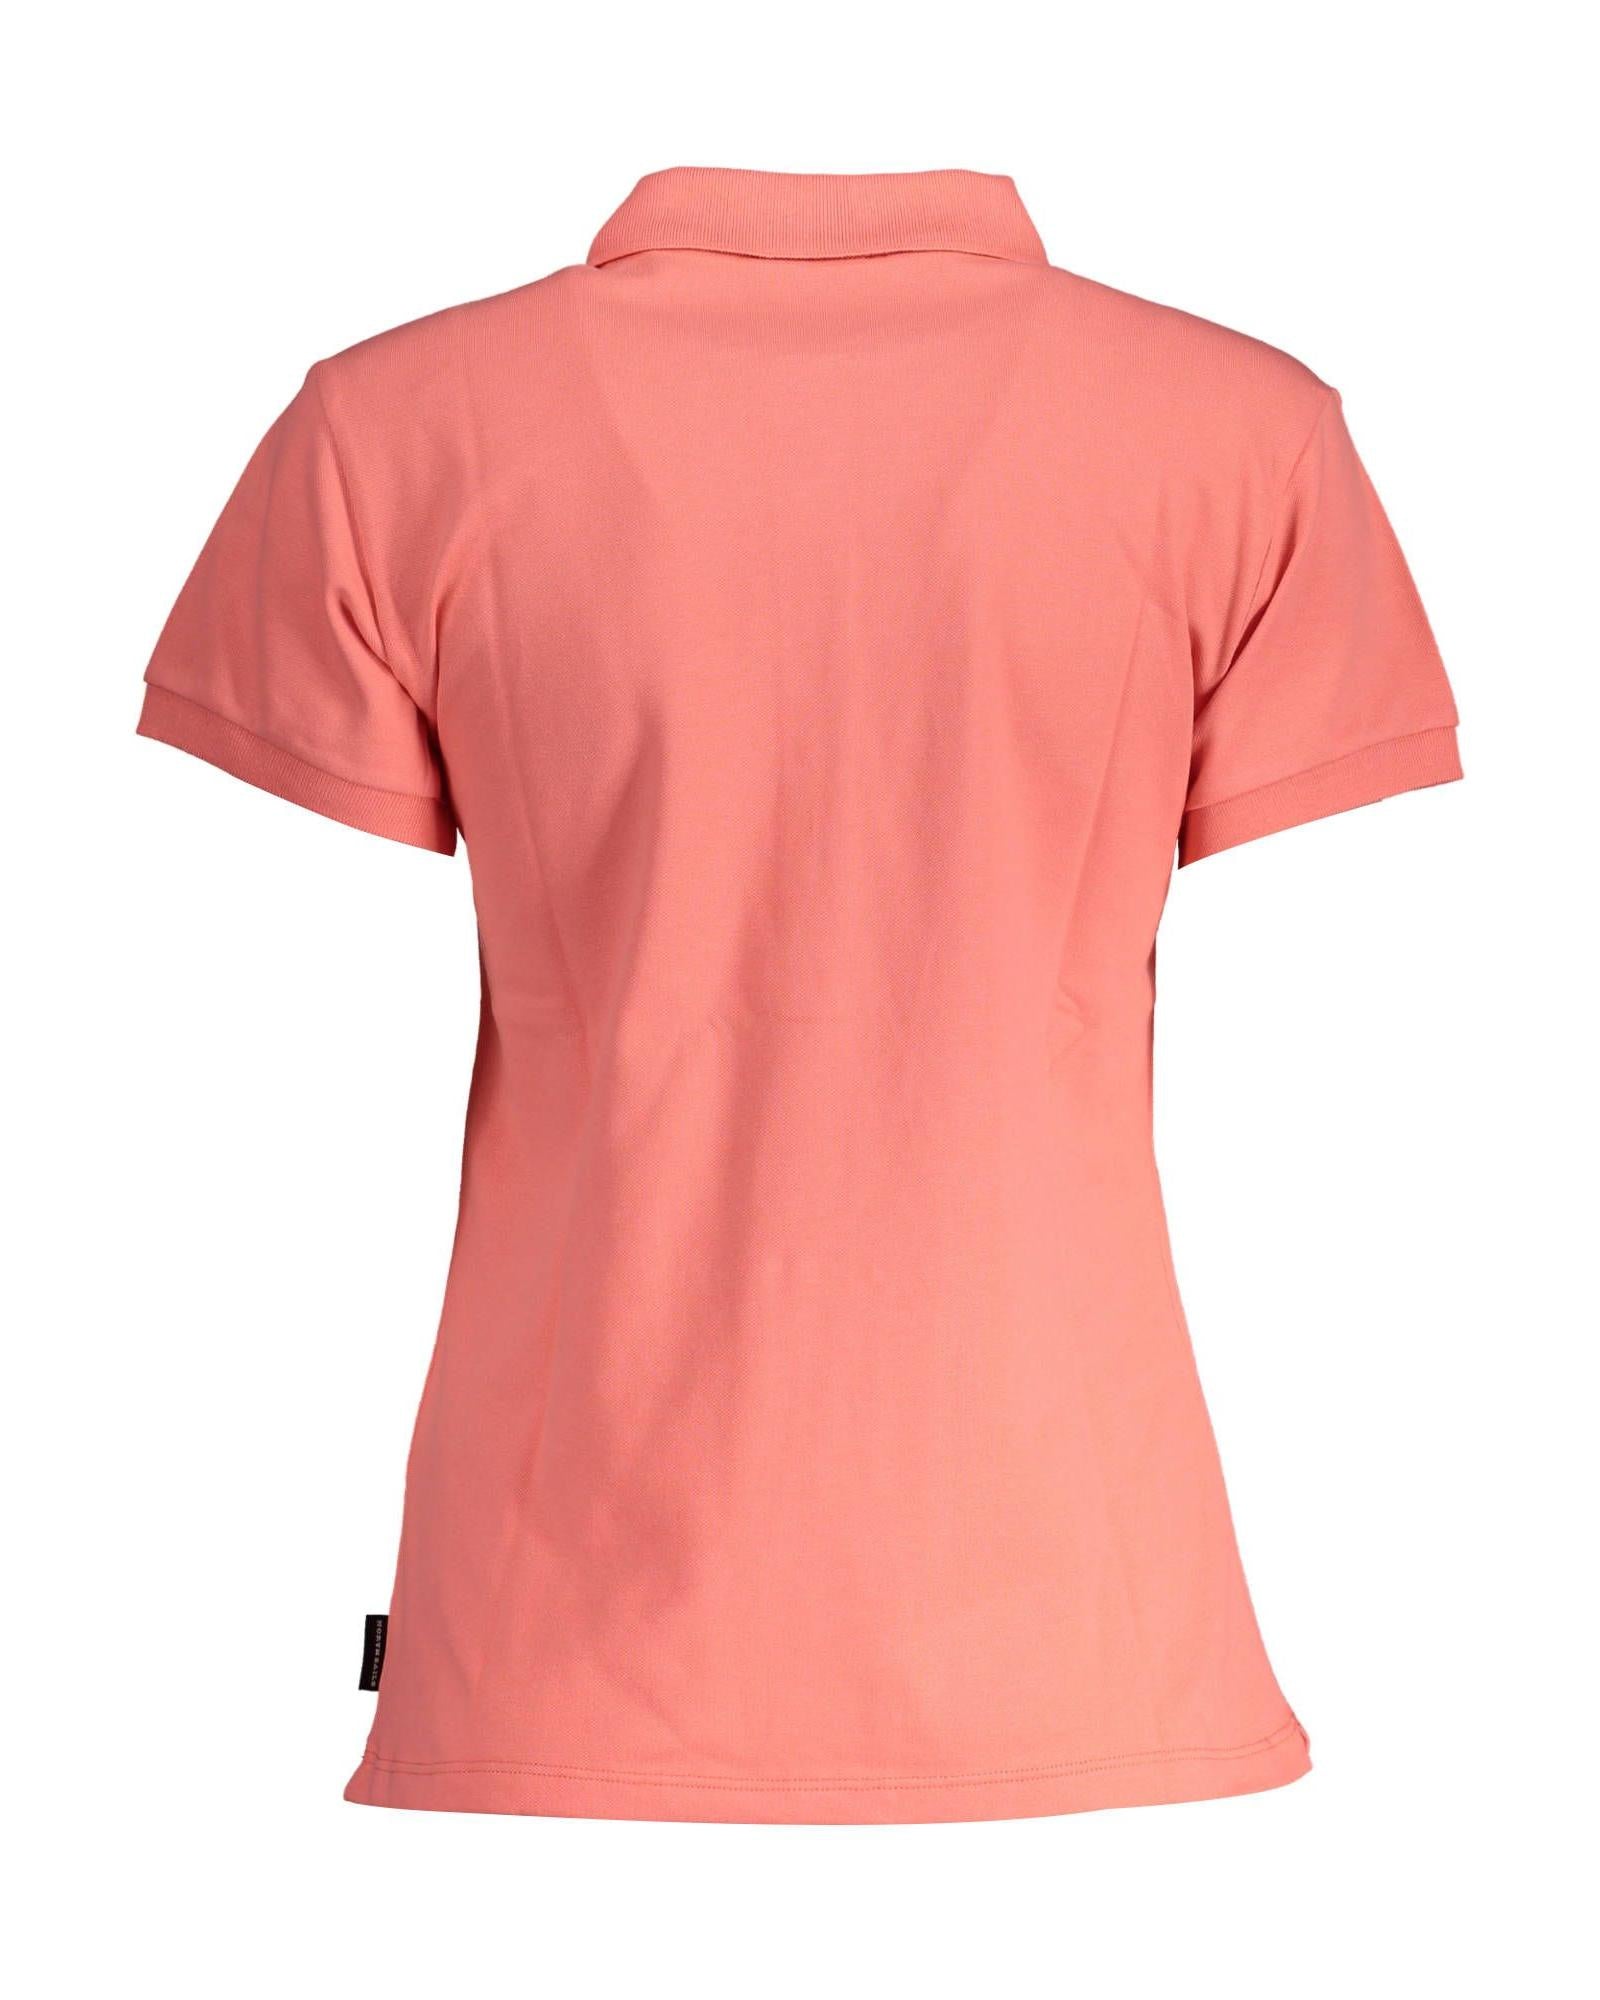 Men's Pink Cotton Polo Shirt - S